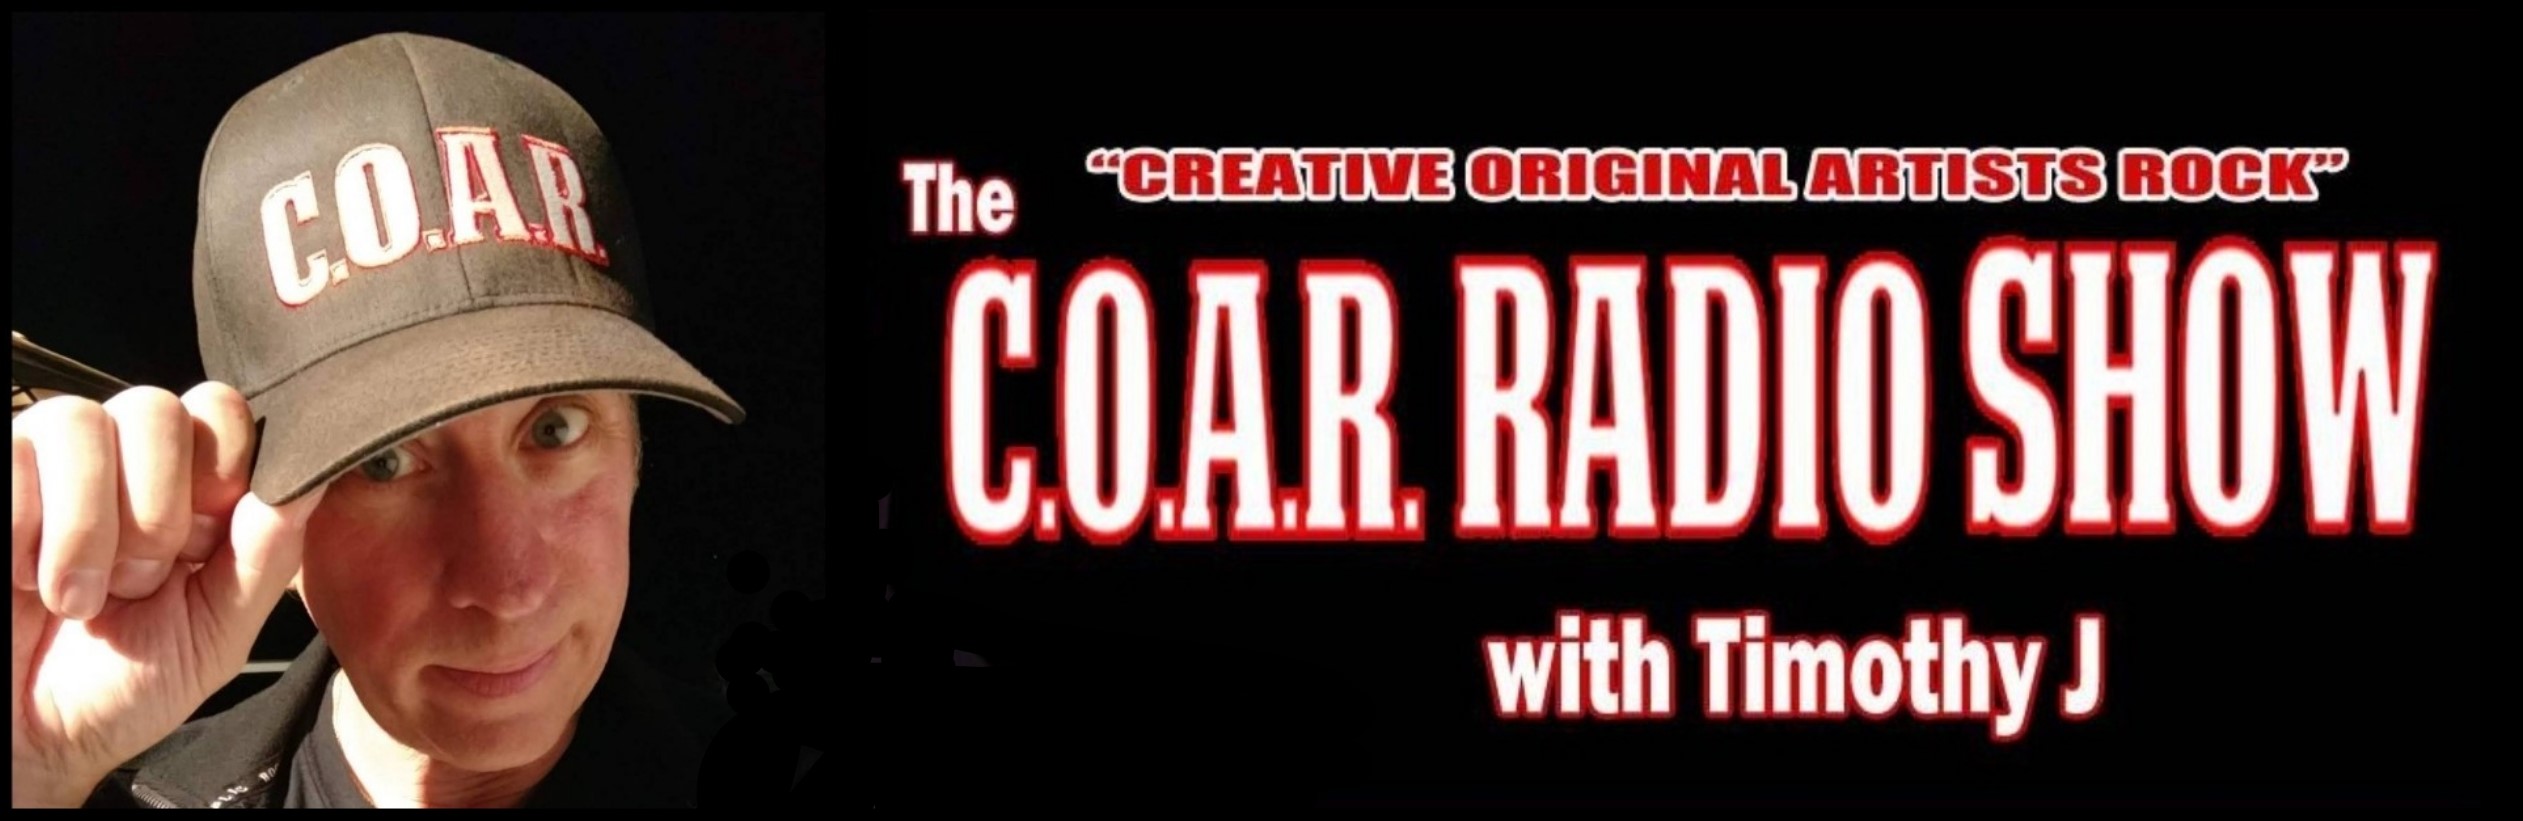 COAR Radio New Banner